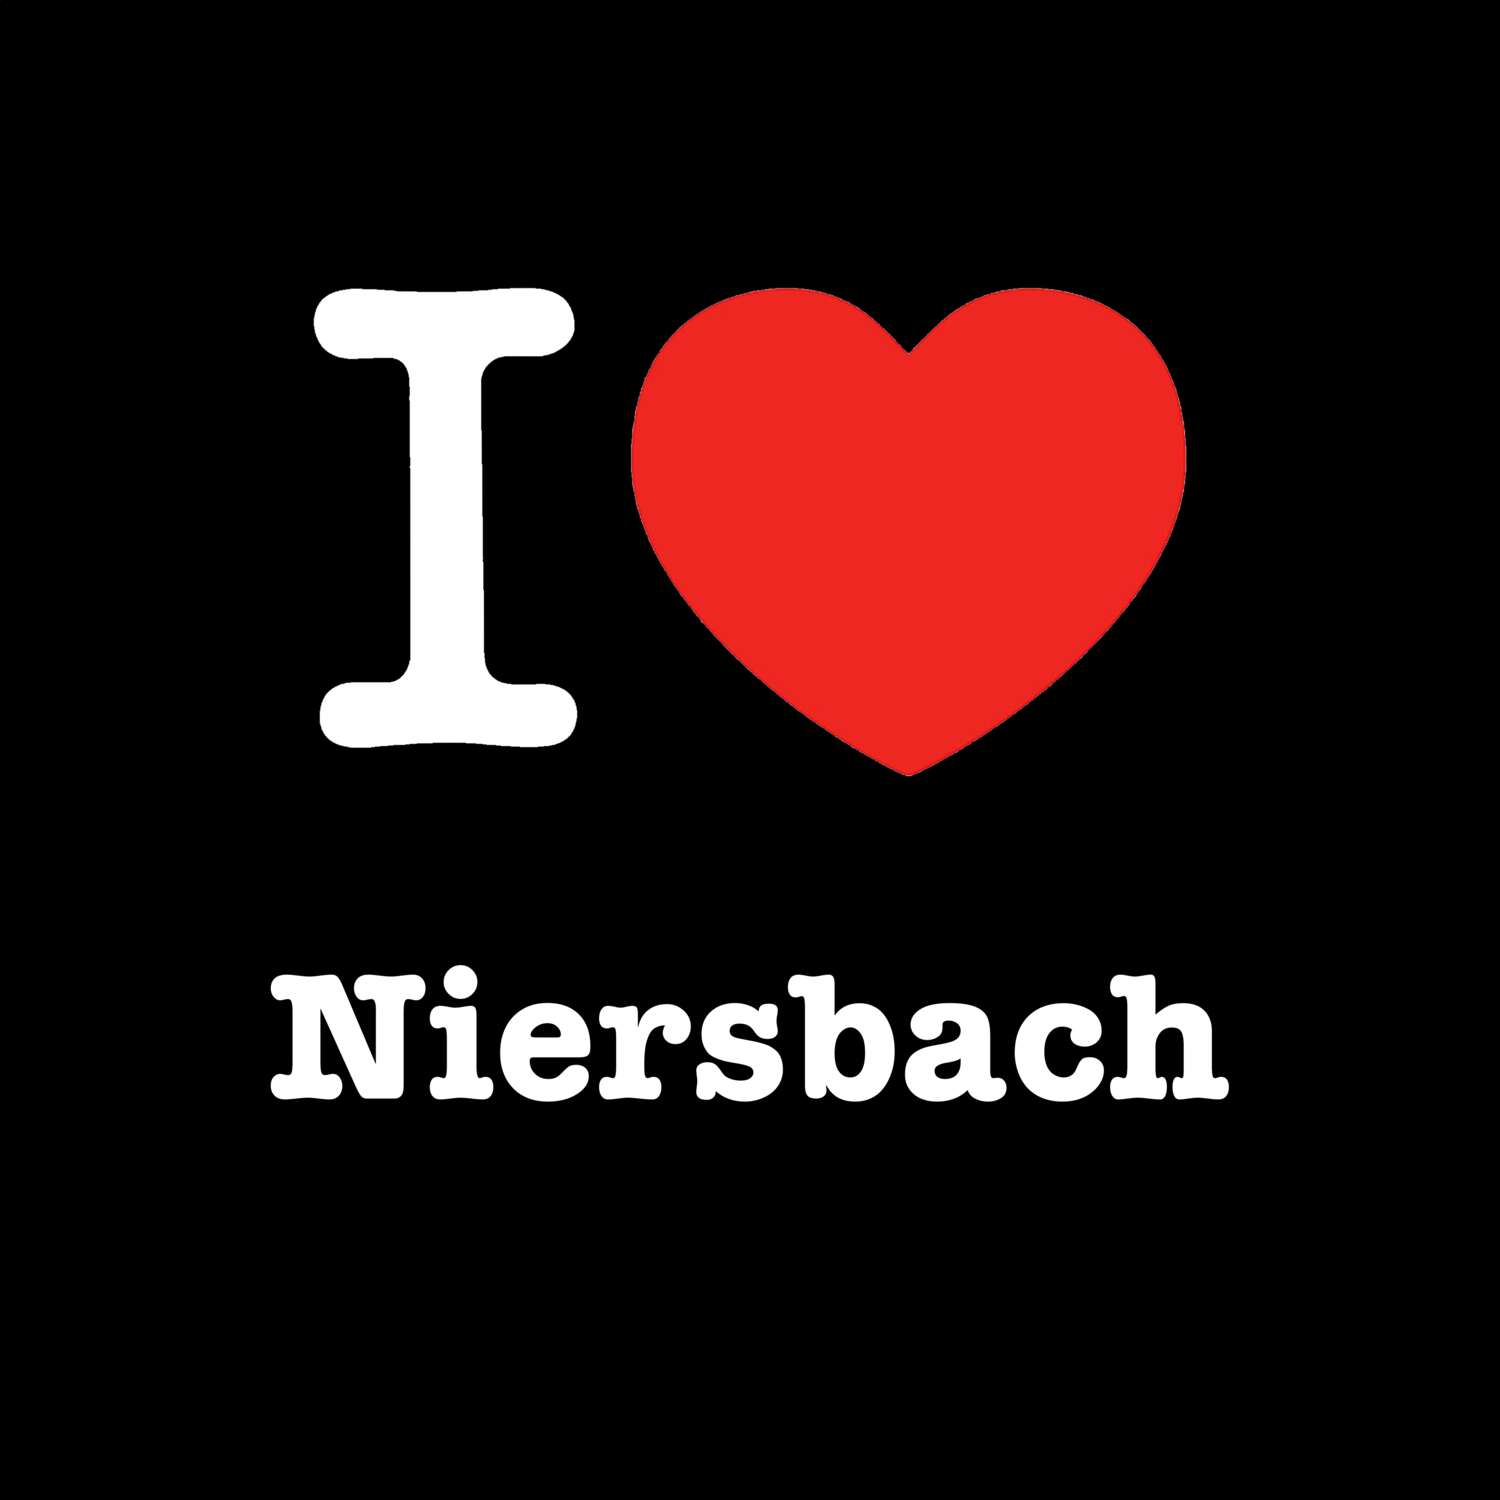 Niersbach T-Shirt »I love«